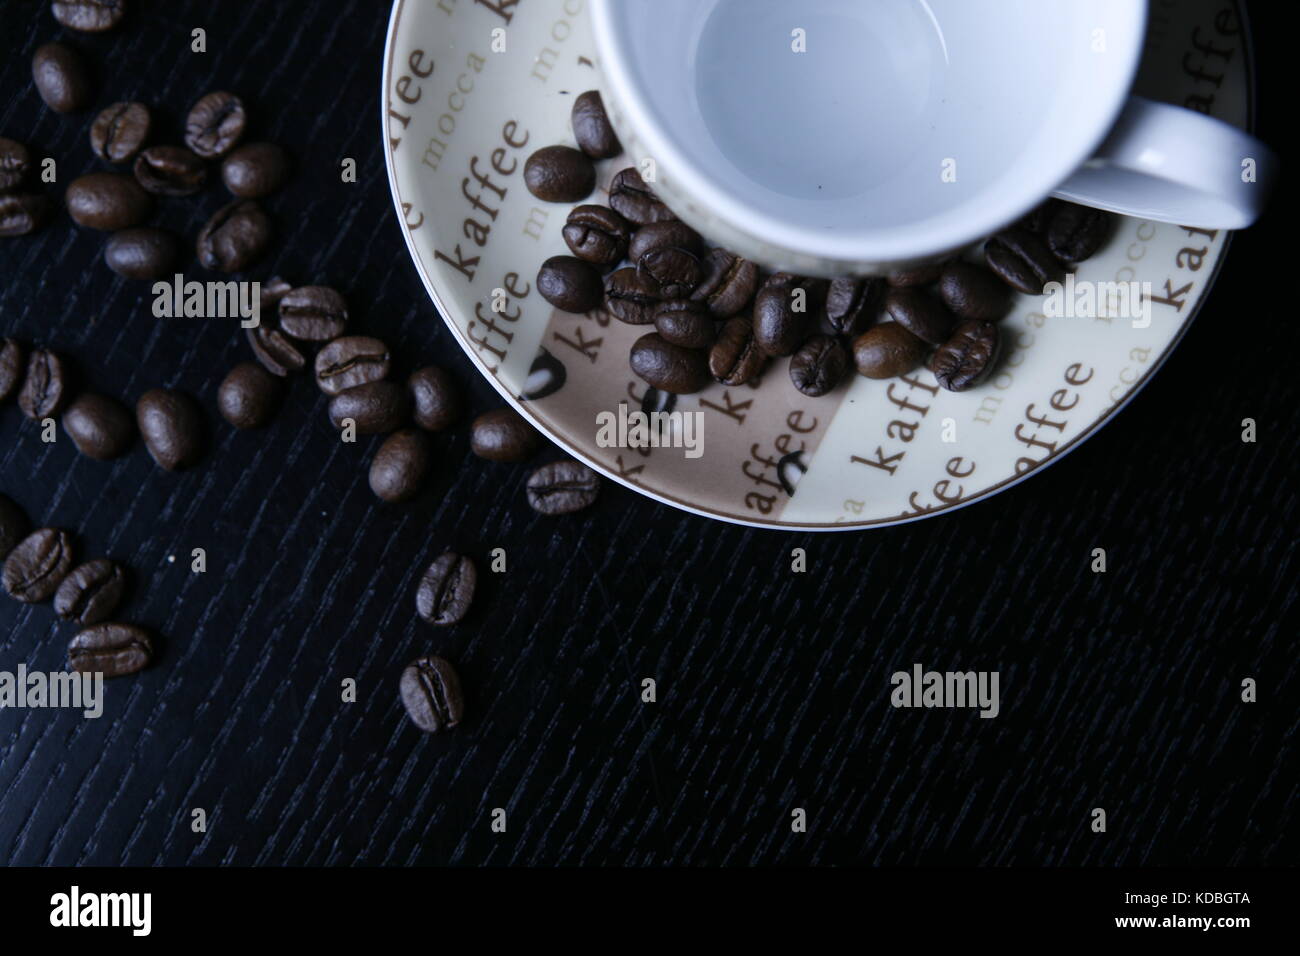 Moccatasse kaffeetasse verstreuten Kaffee Bohnen mit schwarzem auf tisch - Mocca taza taza de café con granos de café dispersos en black mesa Foto de stock